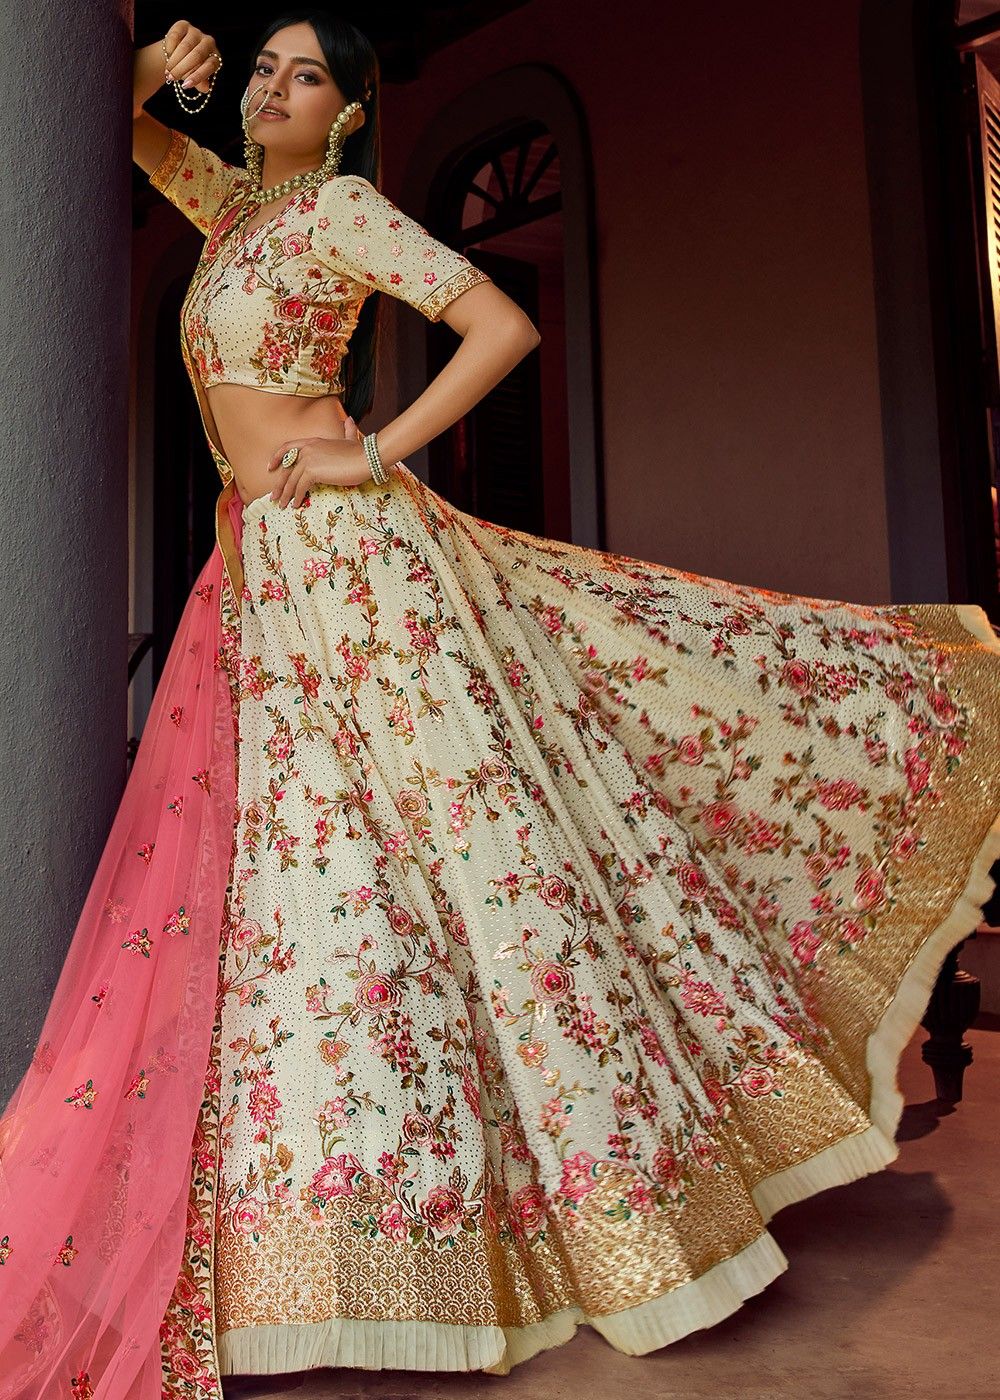 Shop White Lehenga for Women Online from India's Luxury Designers 2023